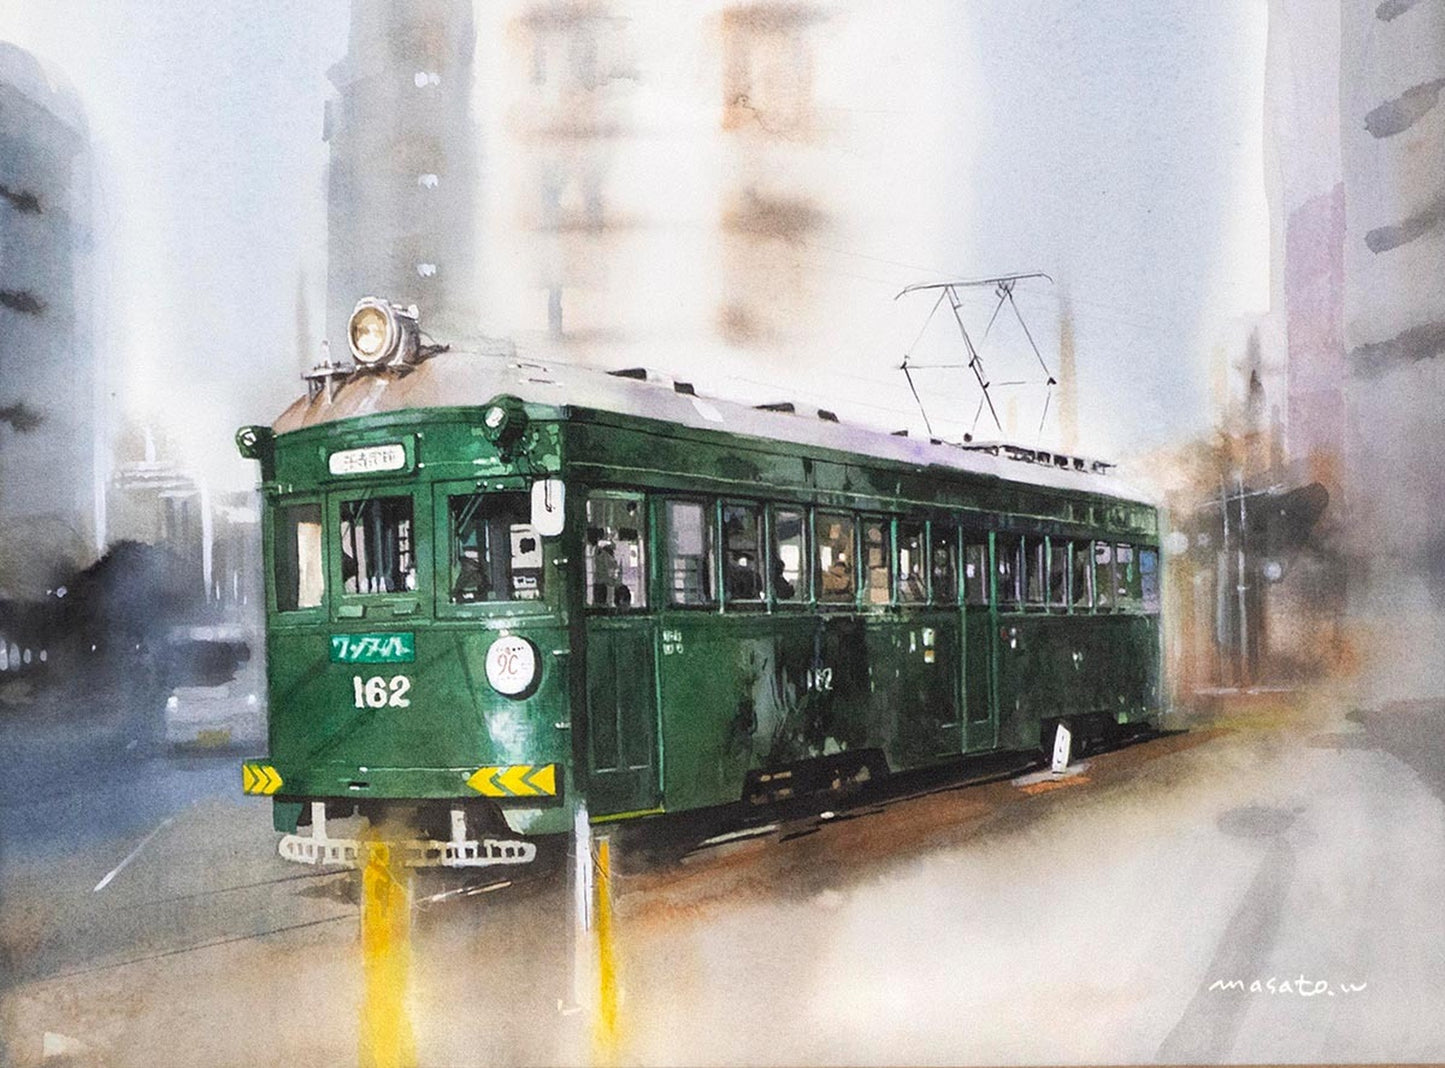 Old green tram